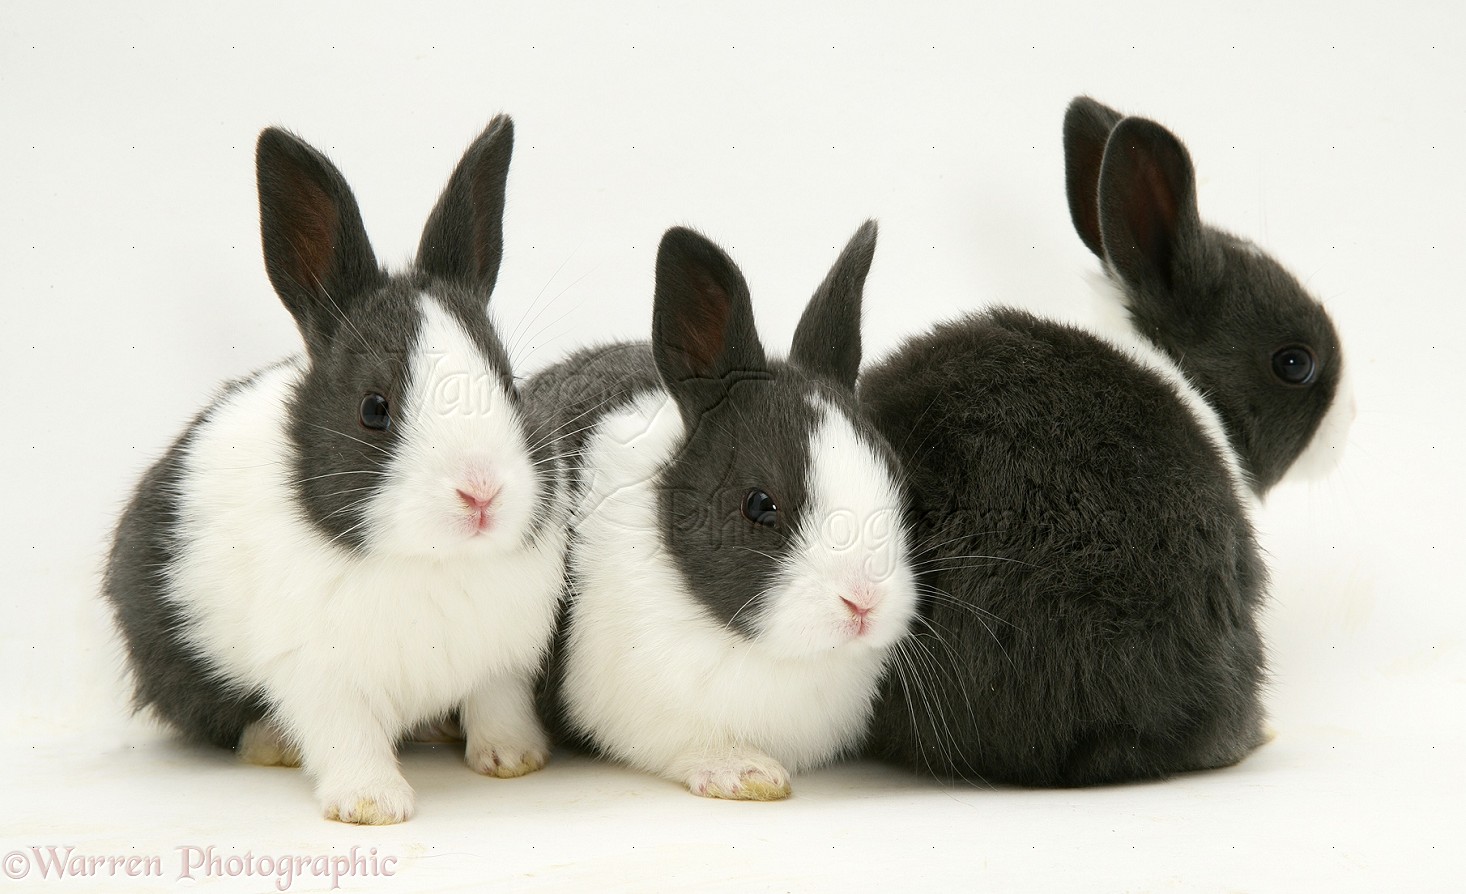 Three black-and-white baby rabbits photo WP12421